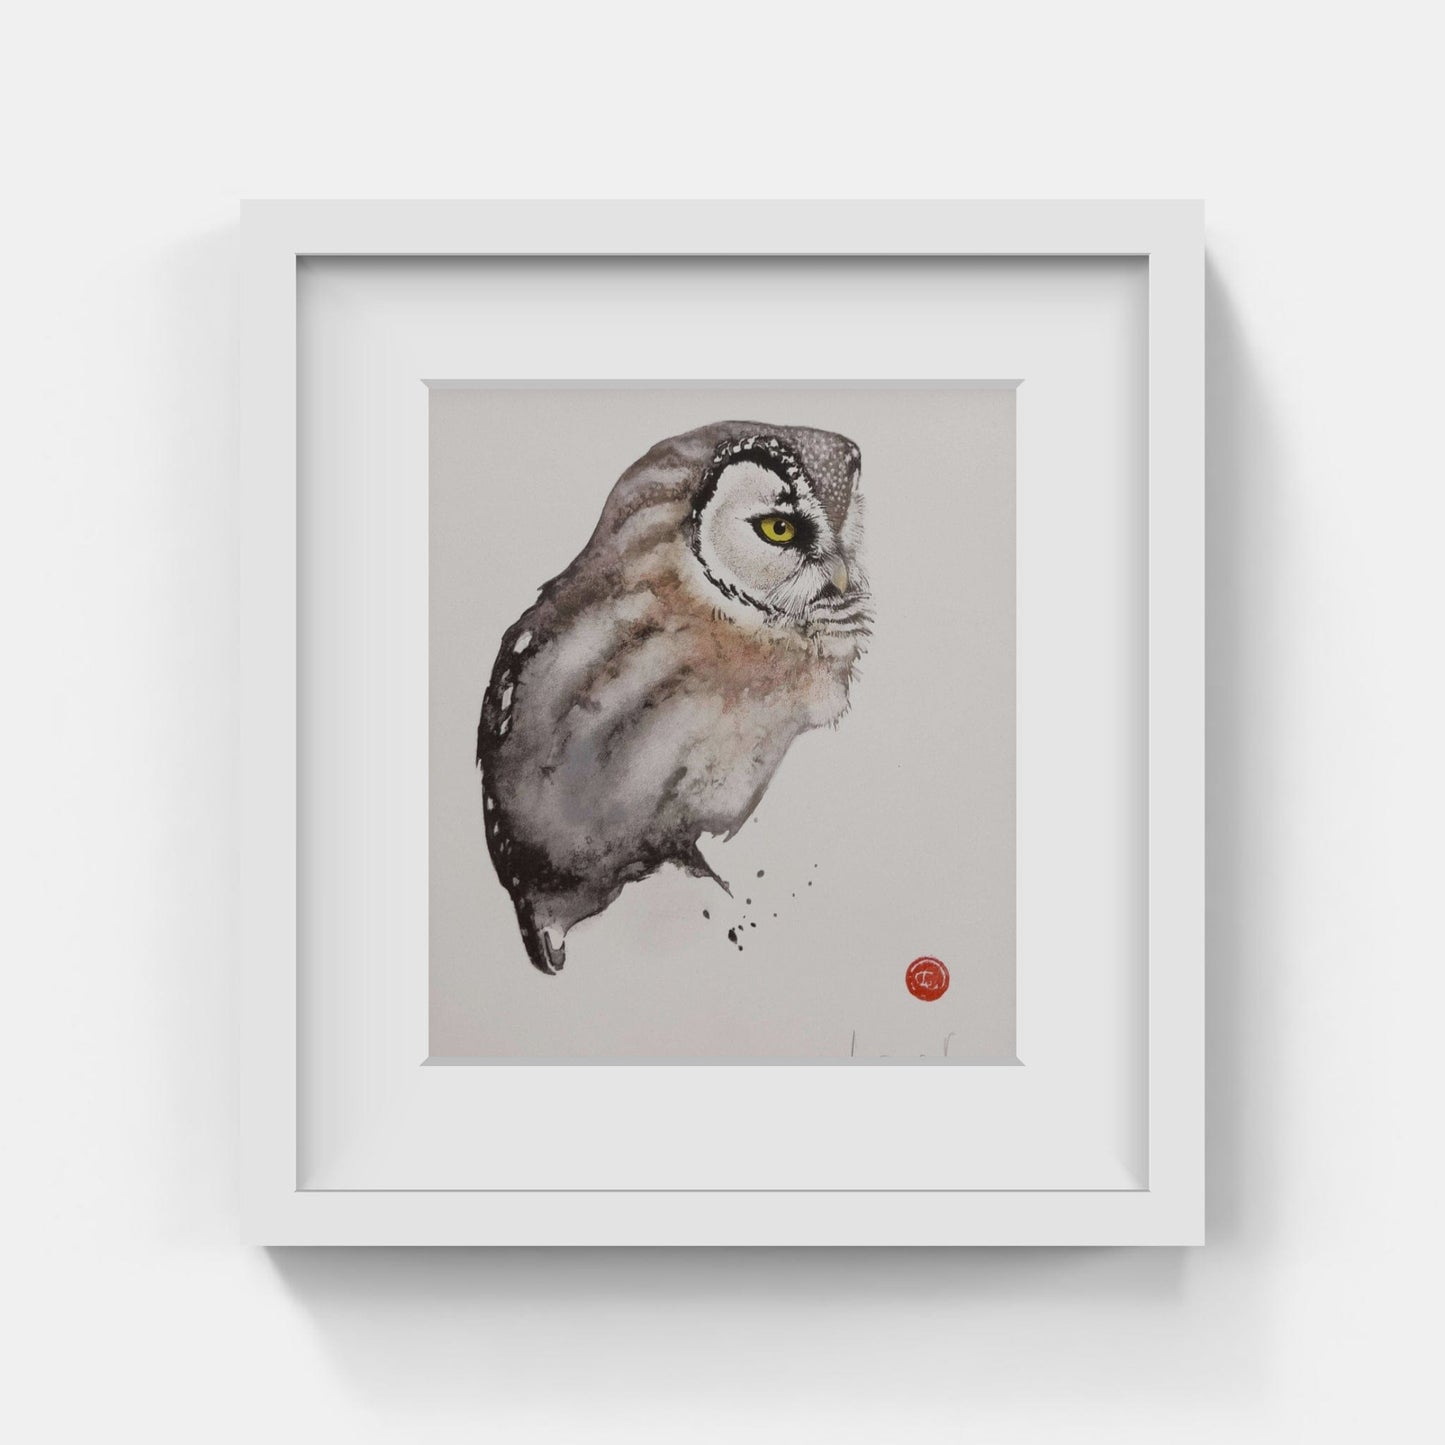 Karl Mårtens - Pearl owl